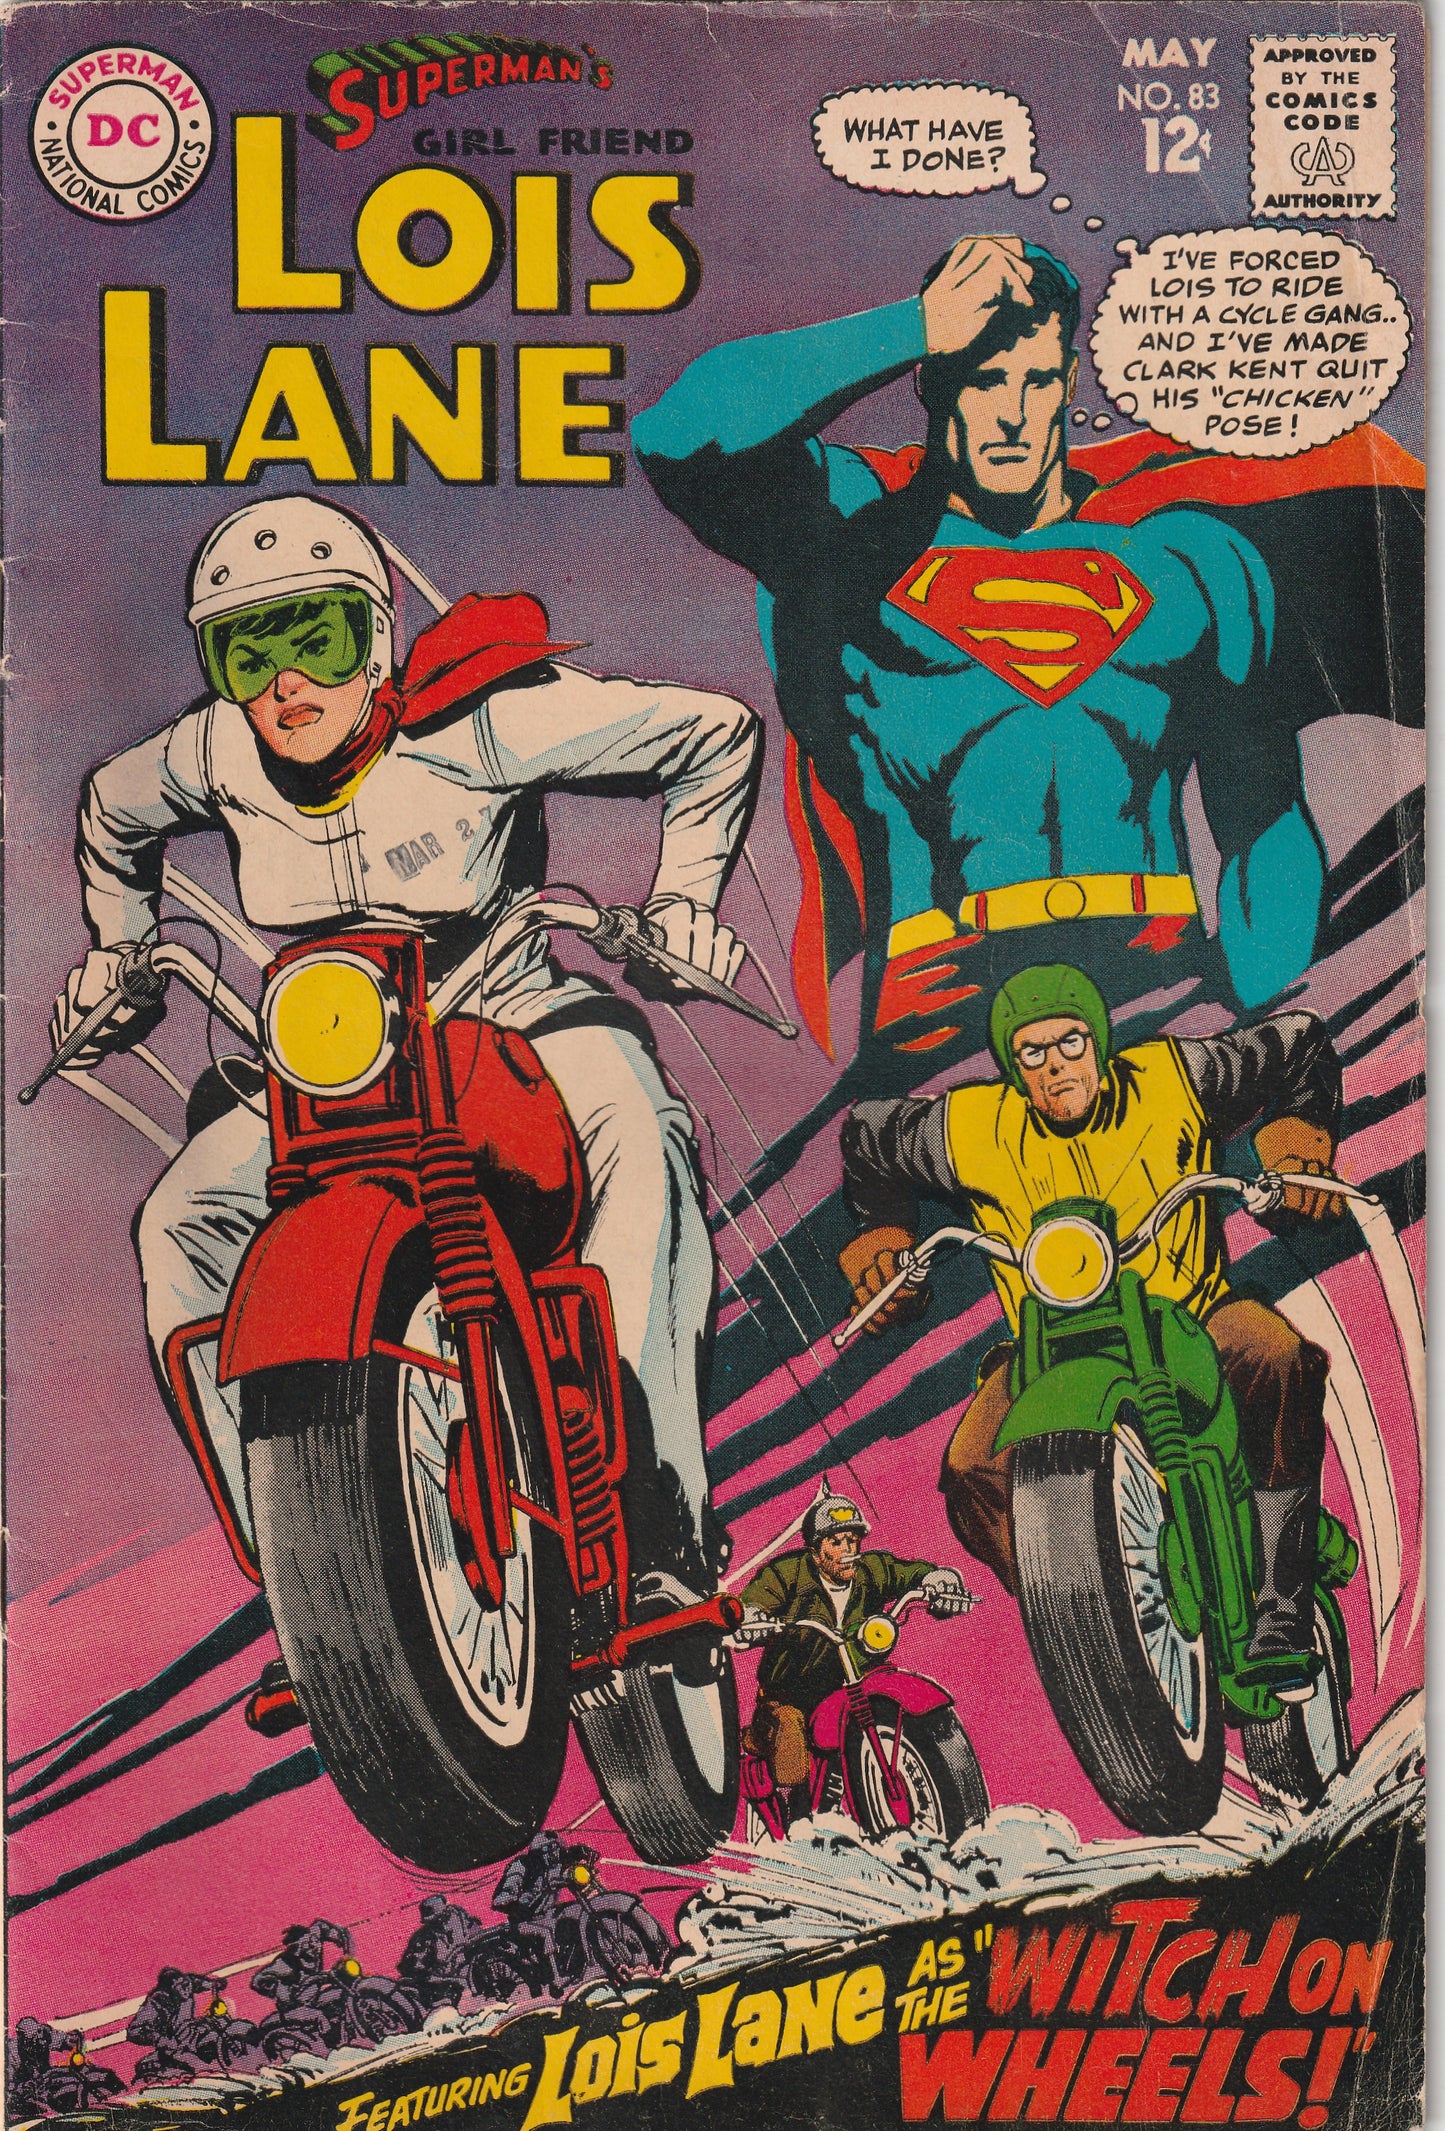 Superman's Girl Friend Lois Lane #83 (1968) - "Witch on Wheels"